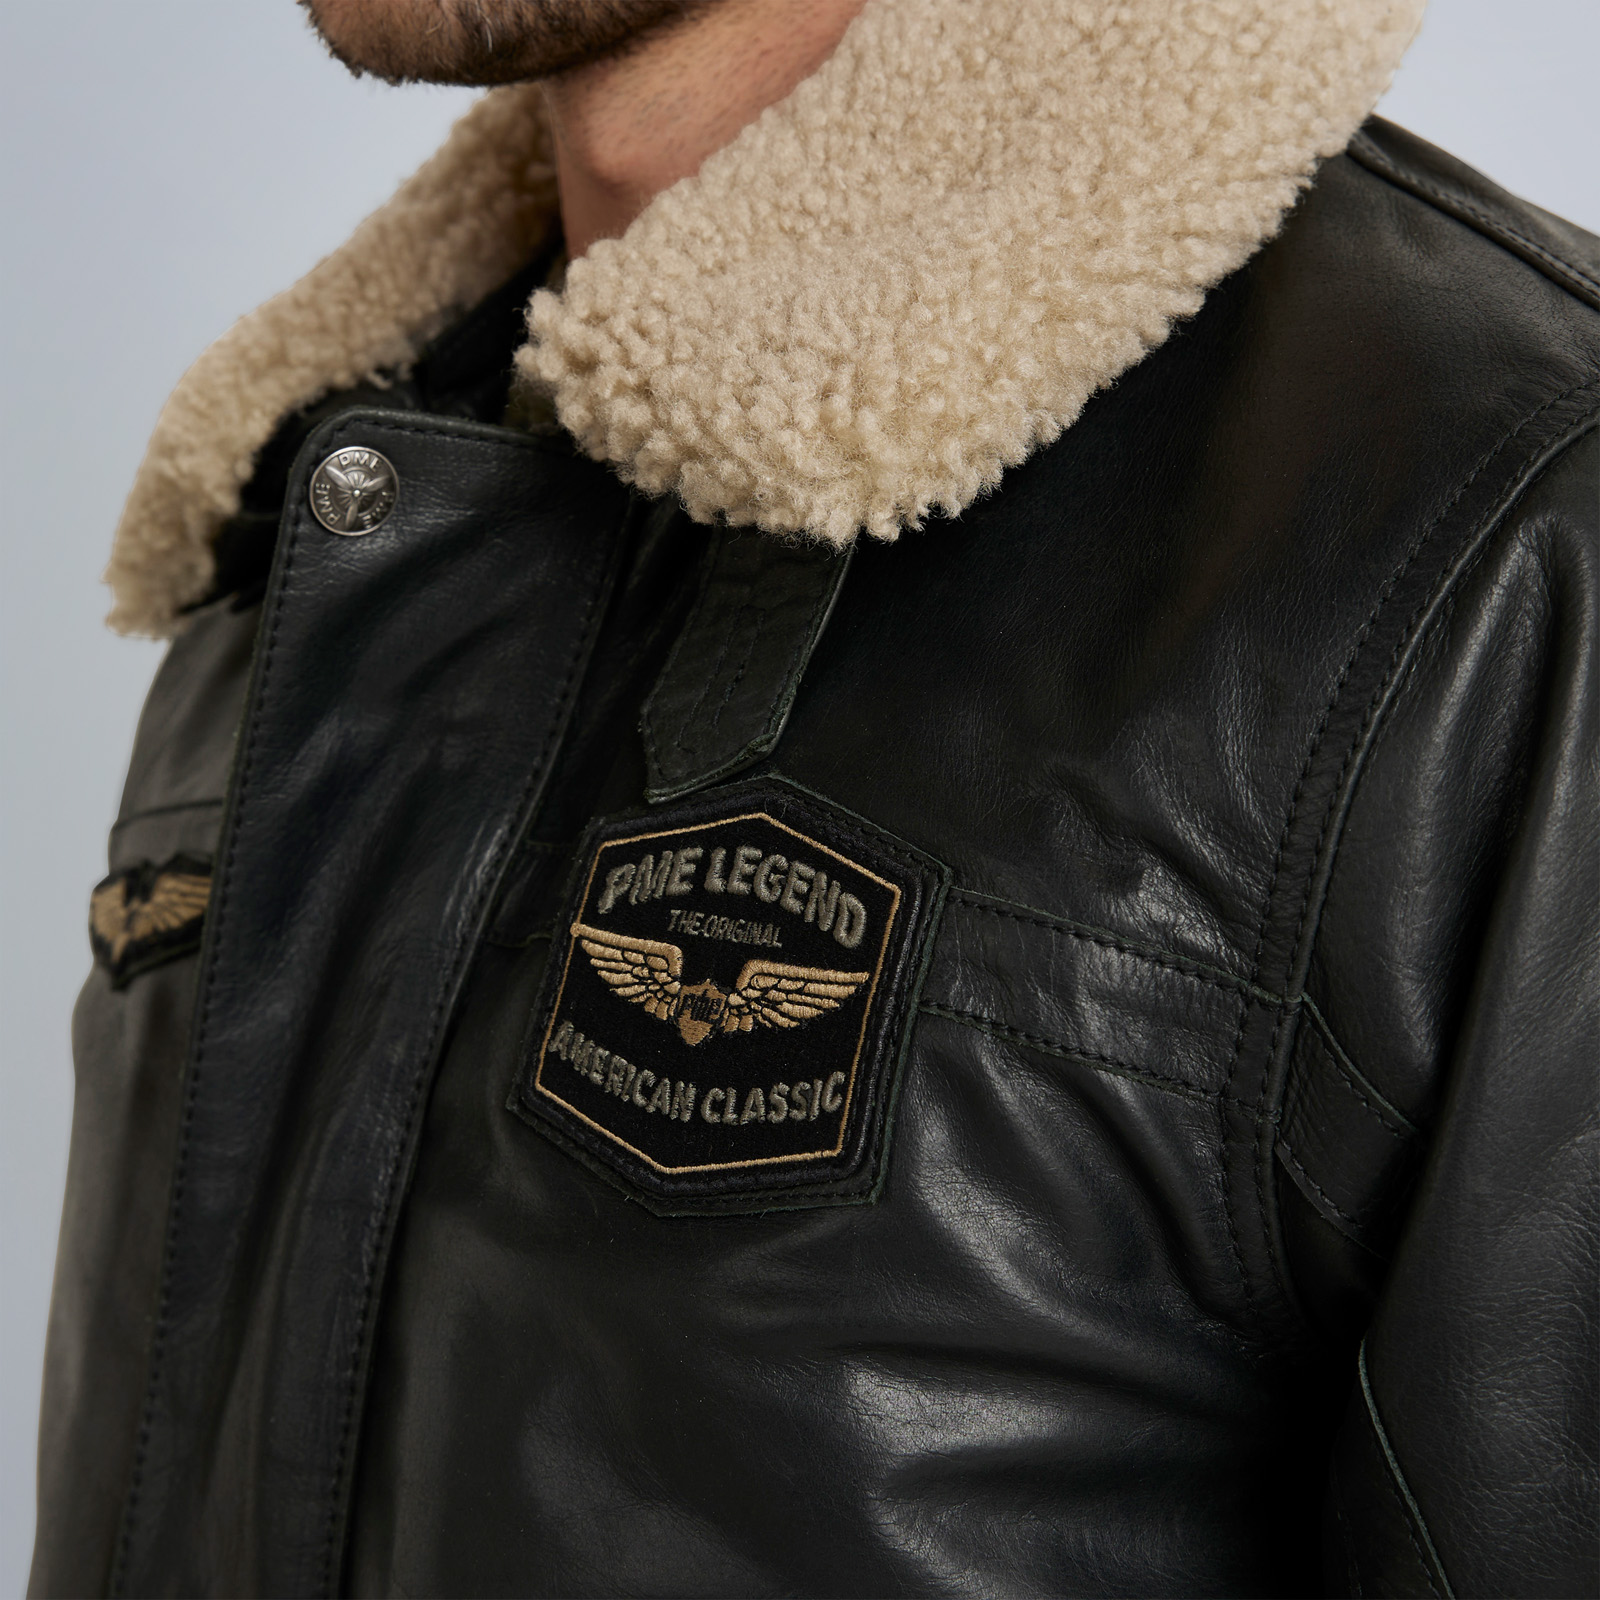 logboek mentaal krom PME LEGEND | Hudson leather jacket | Free shipping and returns